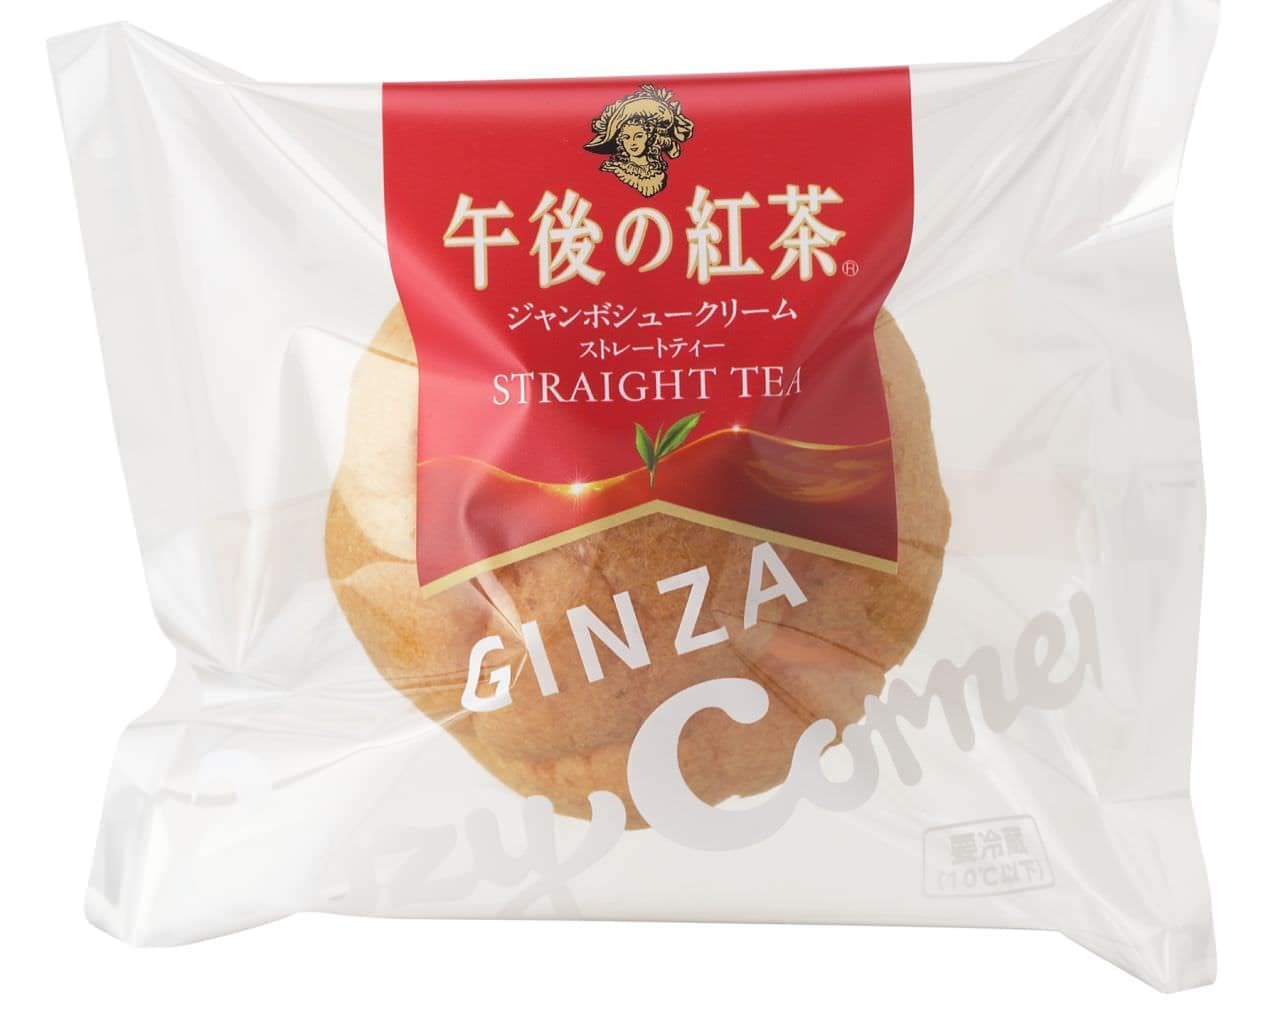 "Jumbo cream puff (afternoon tea straight tea)" from Ginza Cozy Corner